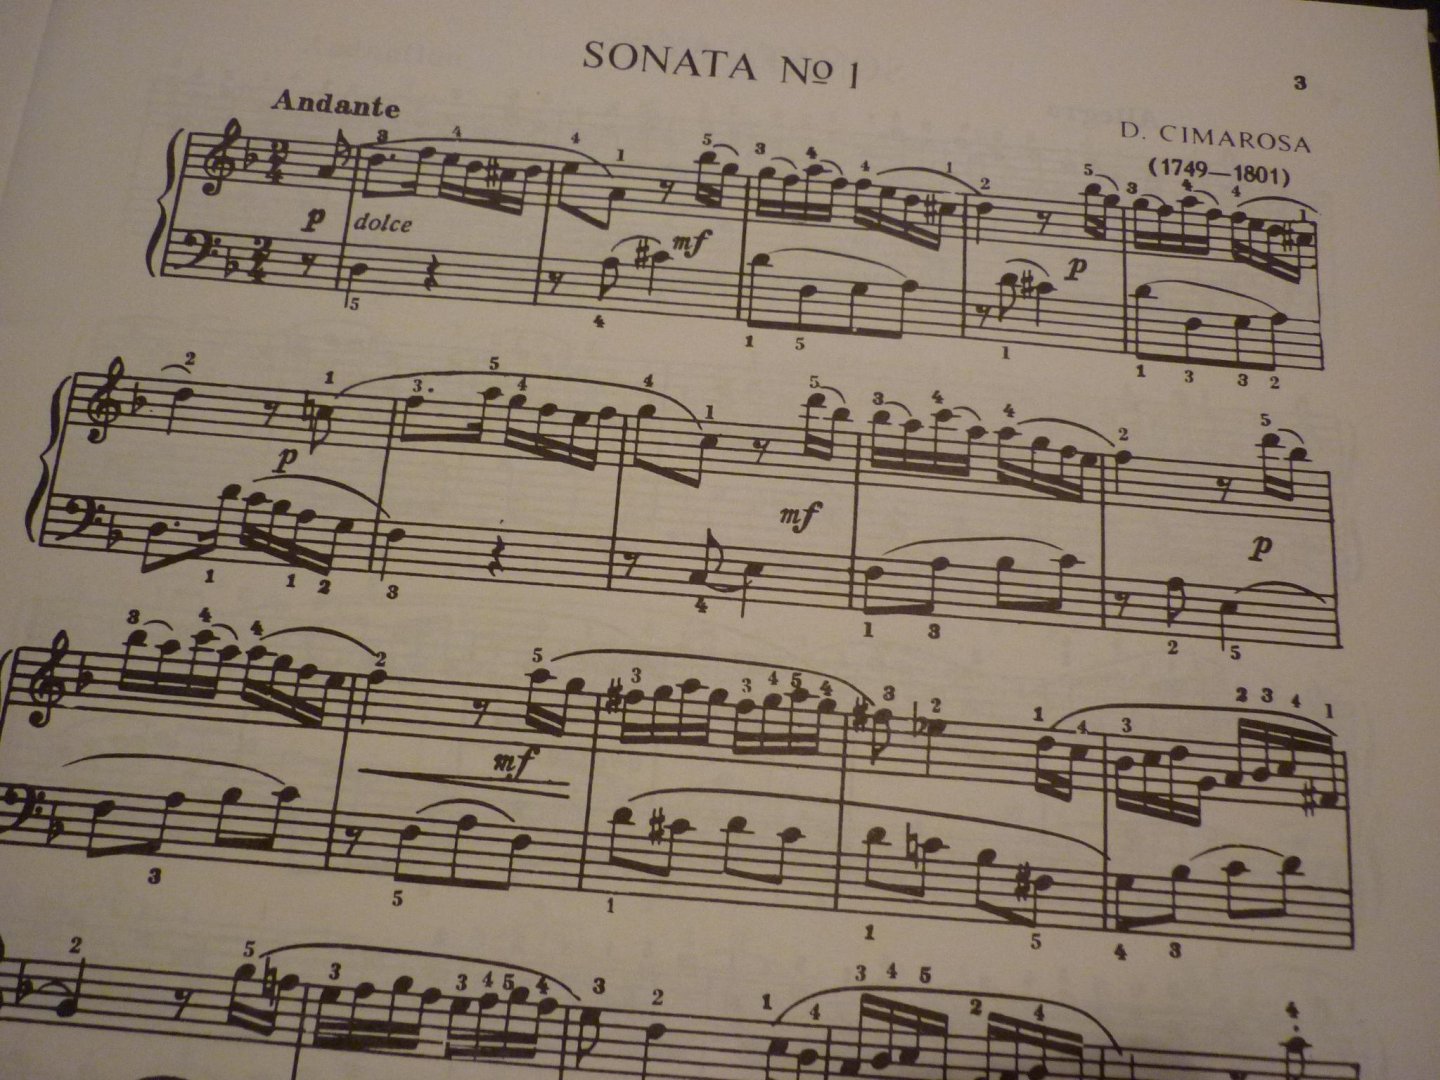 Cimarosa; D. (1749-1801) - 11 Sonatas - Book 1 (1 - 11) - Johan Ligtelijn